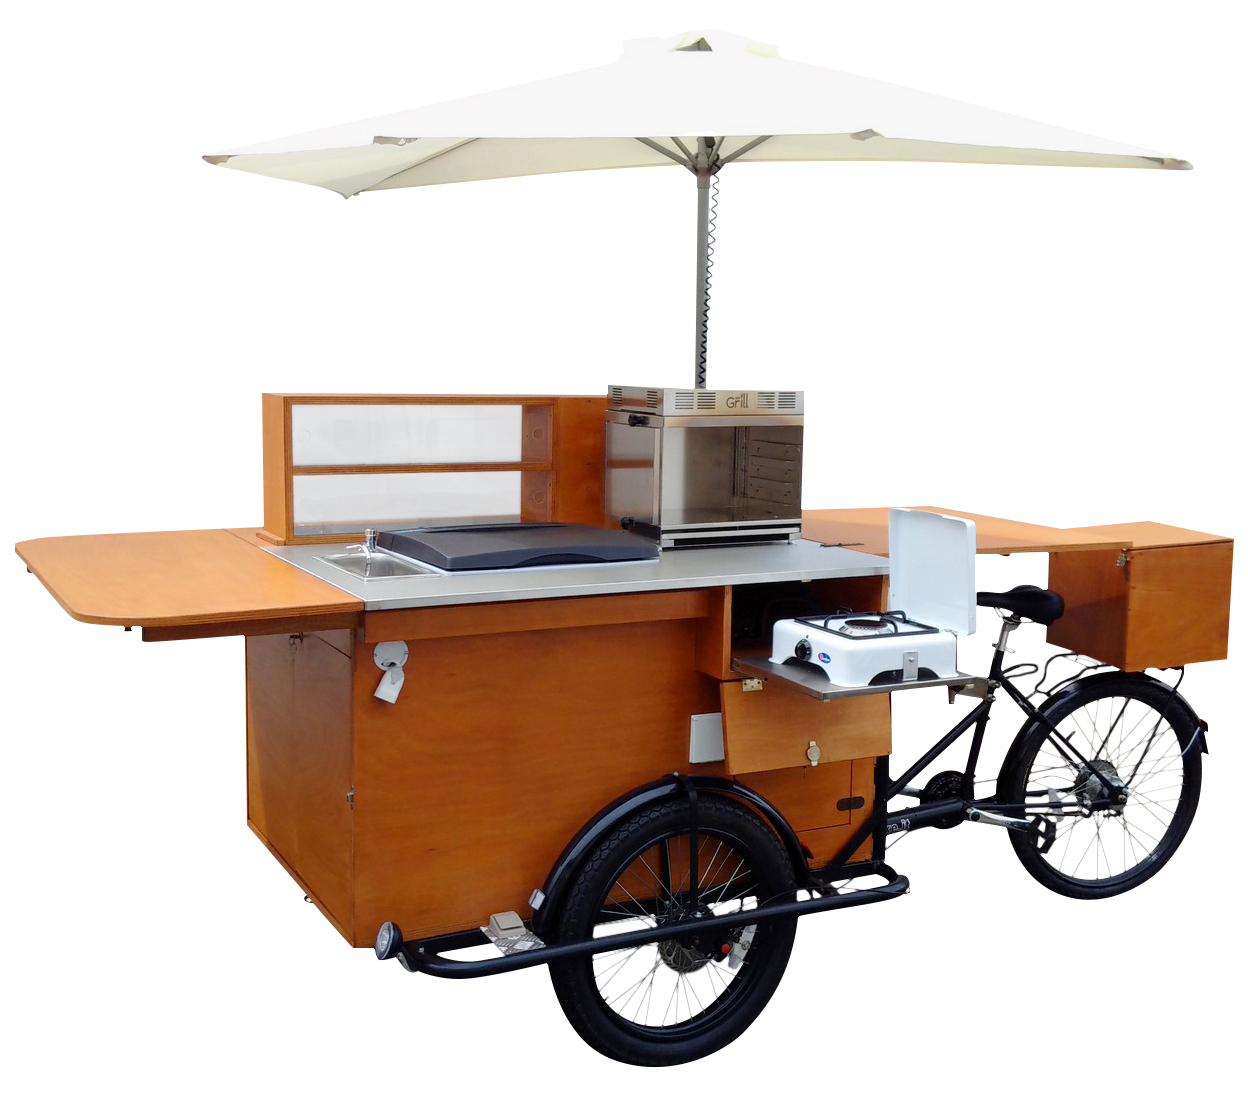 Street_Food_Bike_Cargo_Bike_Banco_Legno_1-a